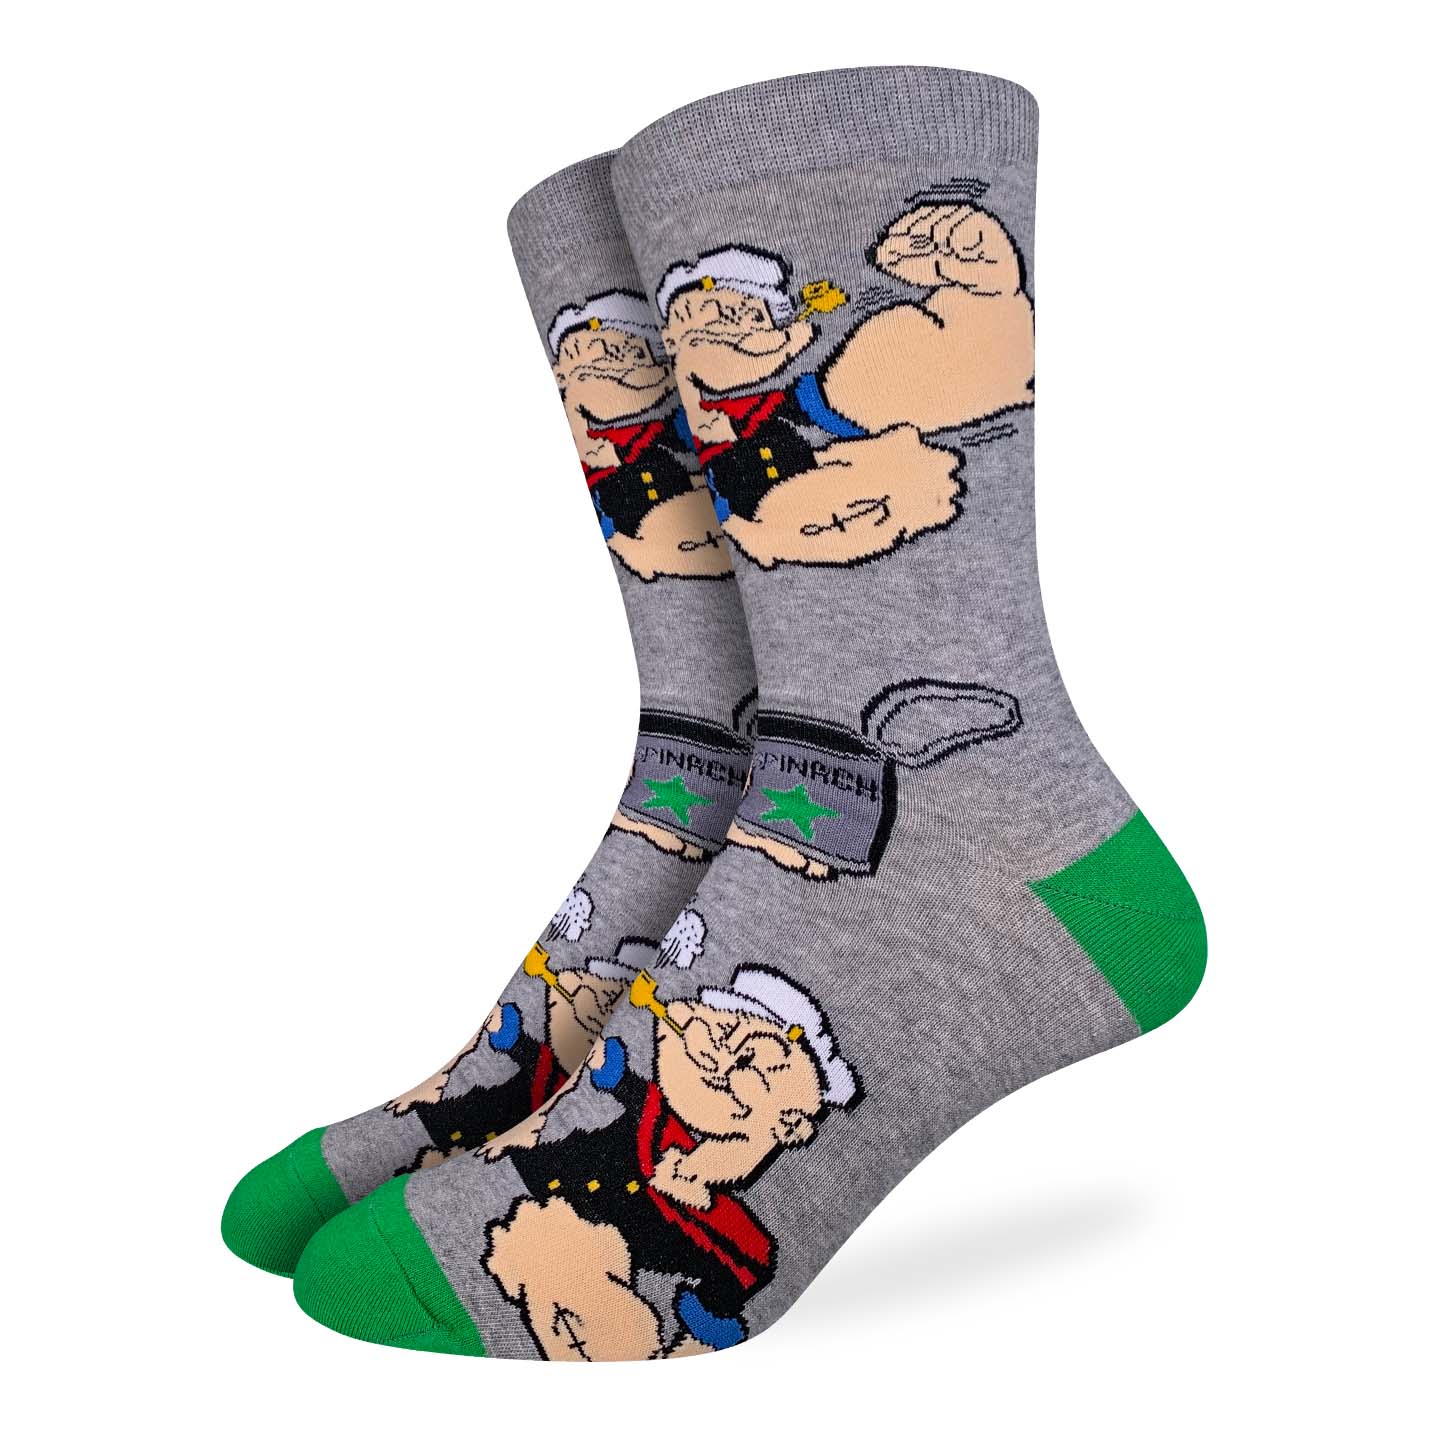 Men's Popeye Flexing Sock's